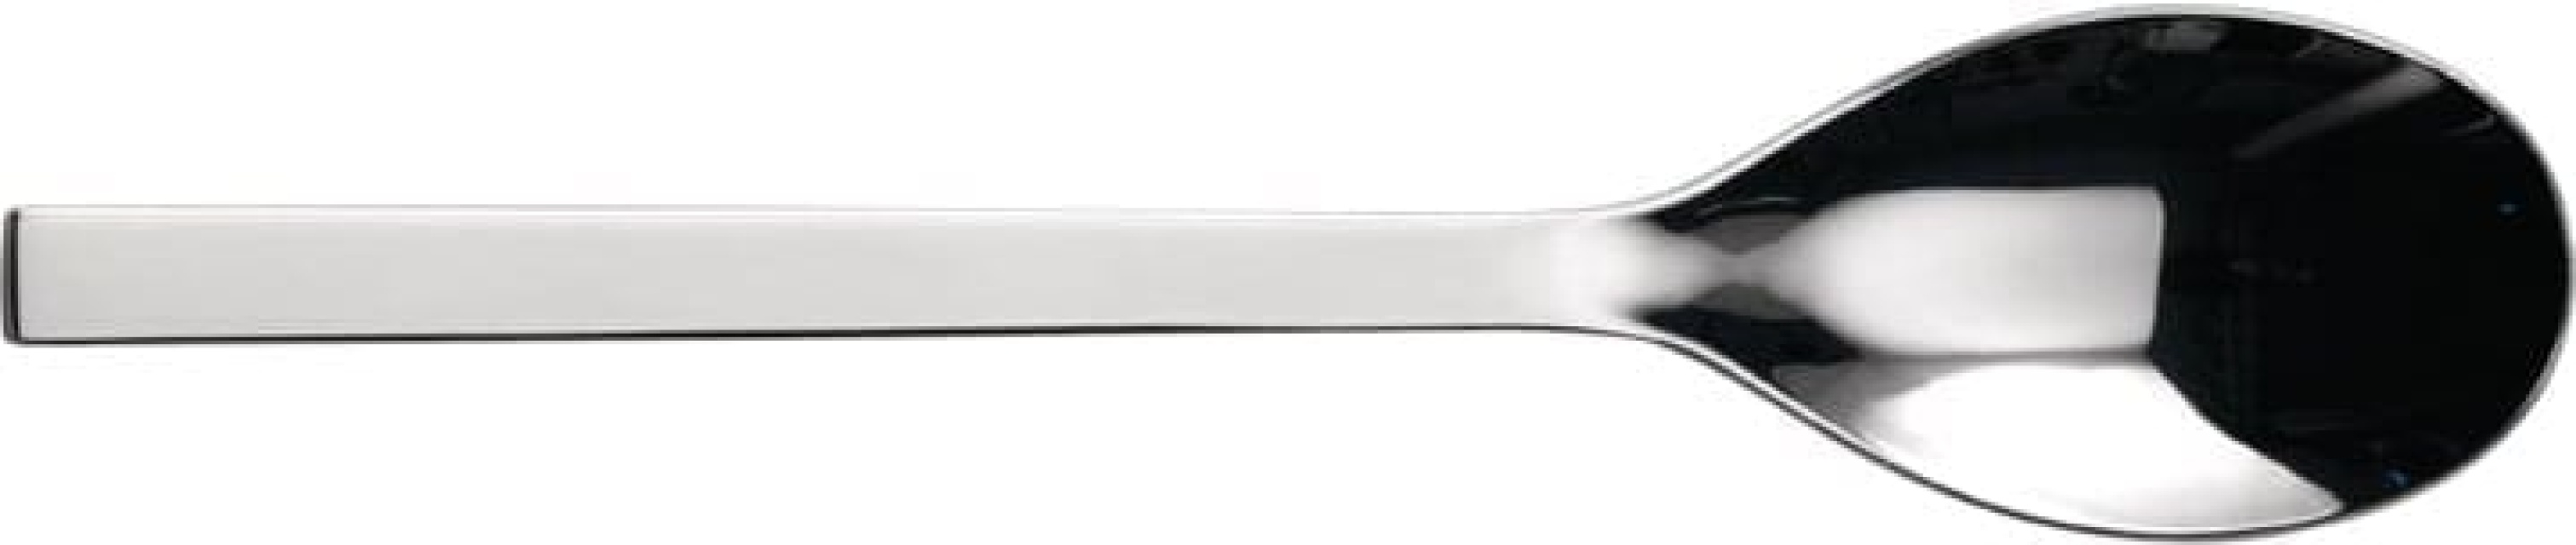 Table spoon, 19 cm, Colombina - Alessi